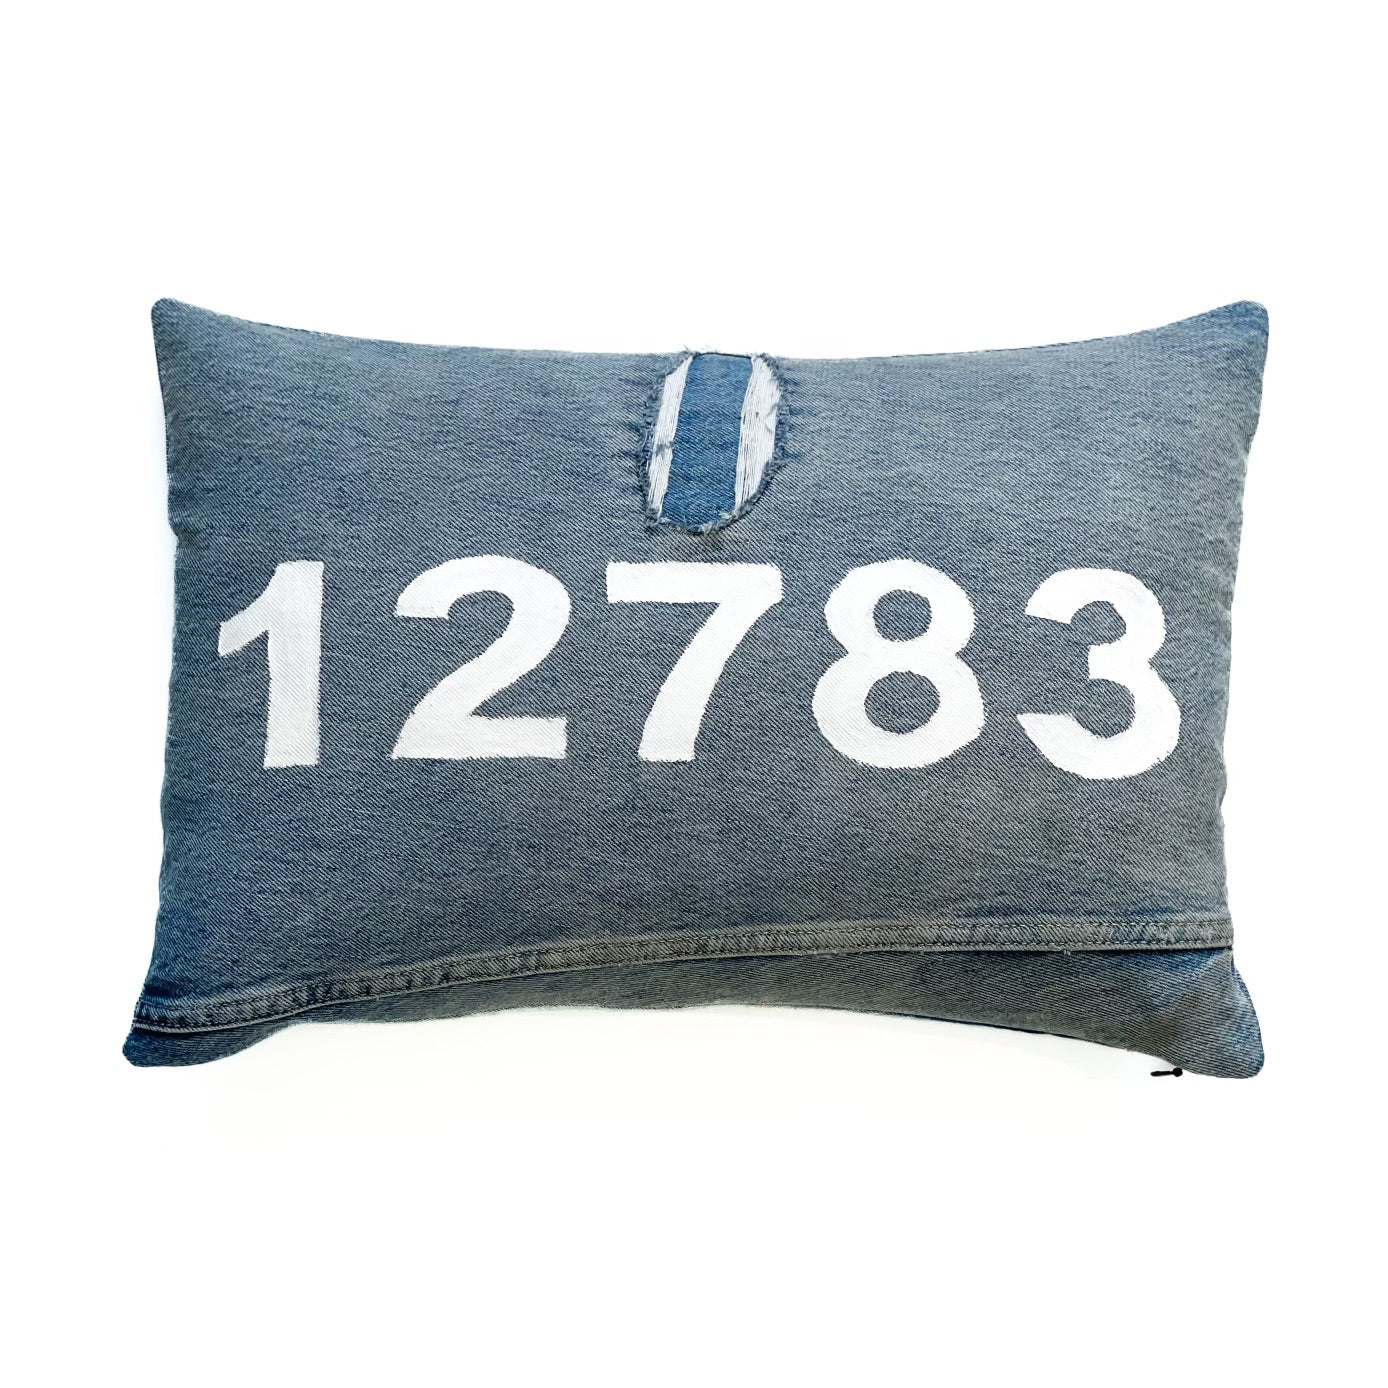 Upcycled Denim Hand-painted Zip Code Pillow